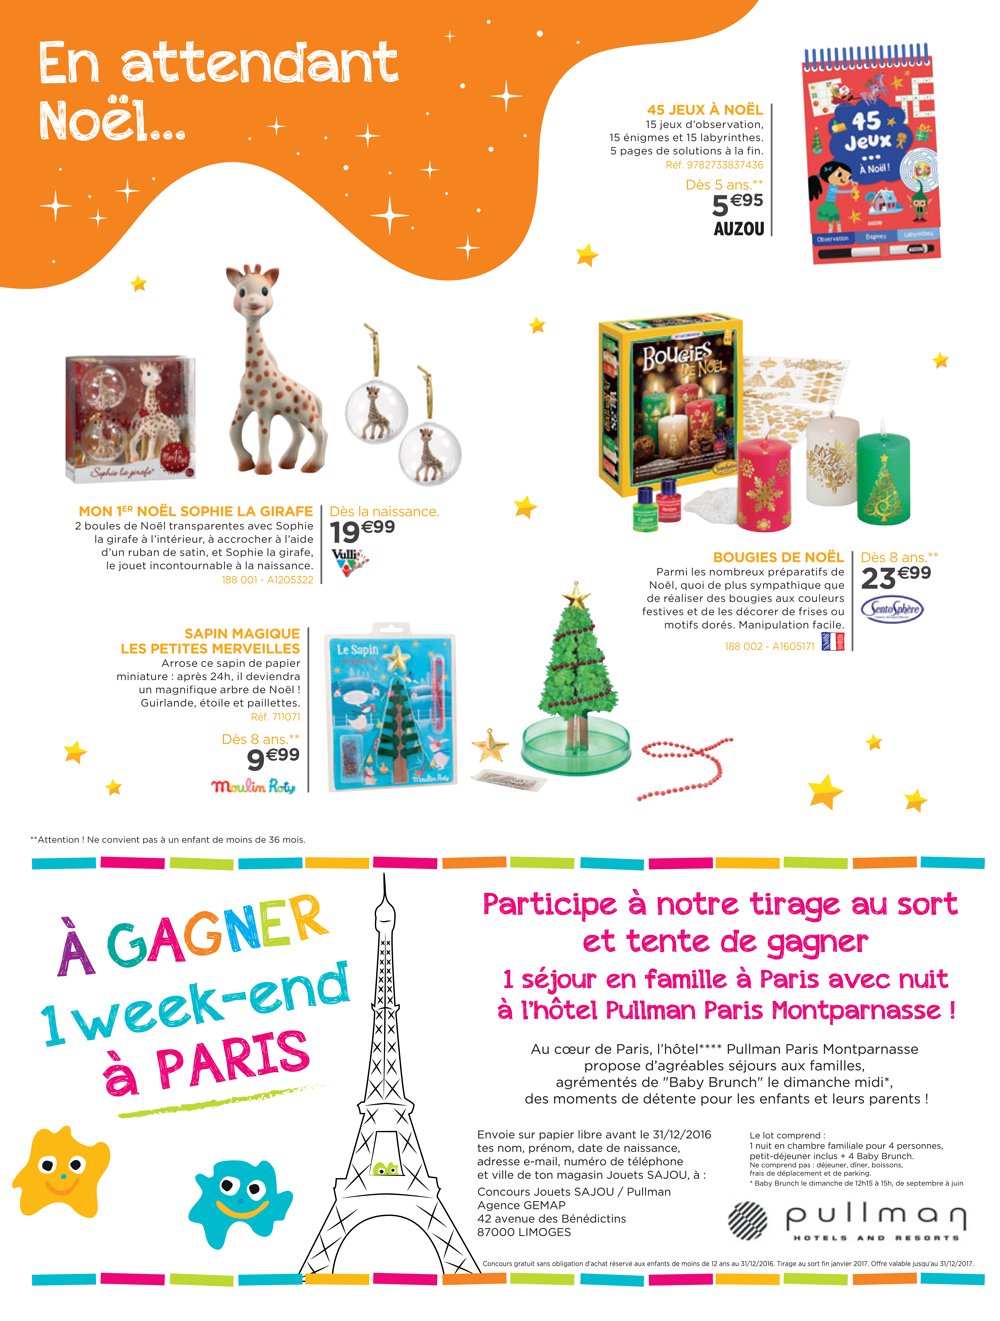 Catalogue Jouets Sajou Noël 2016